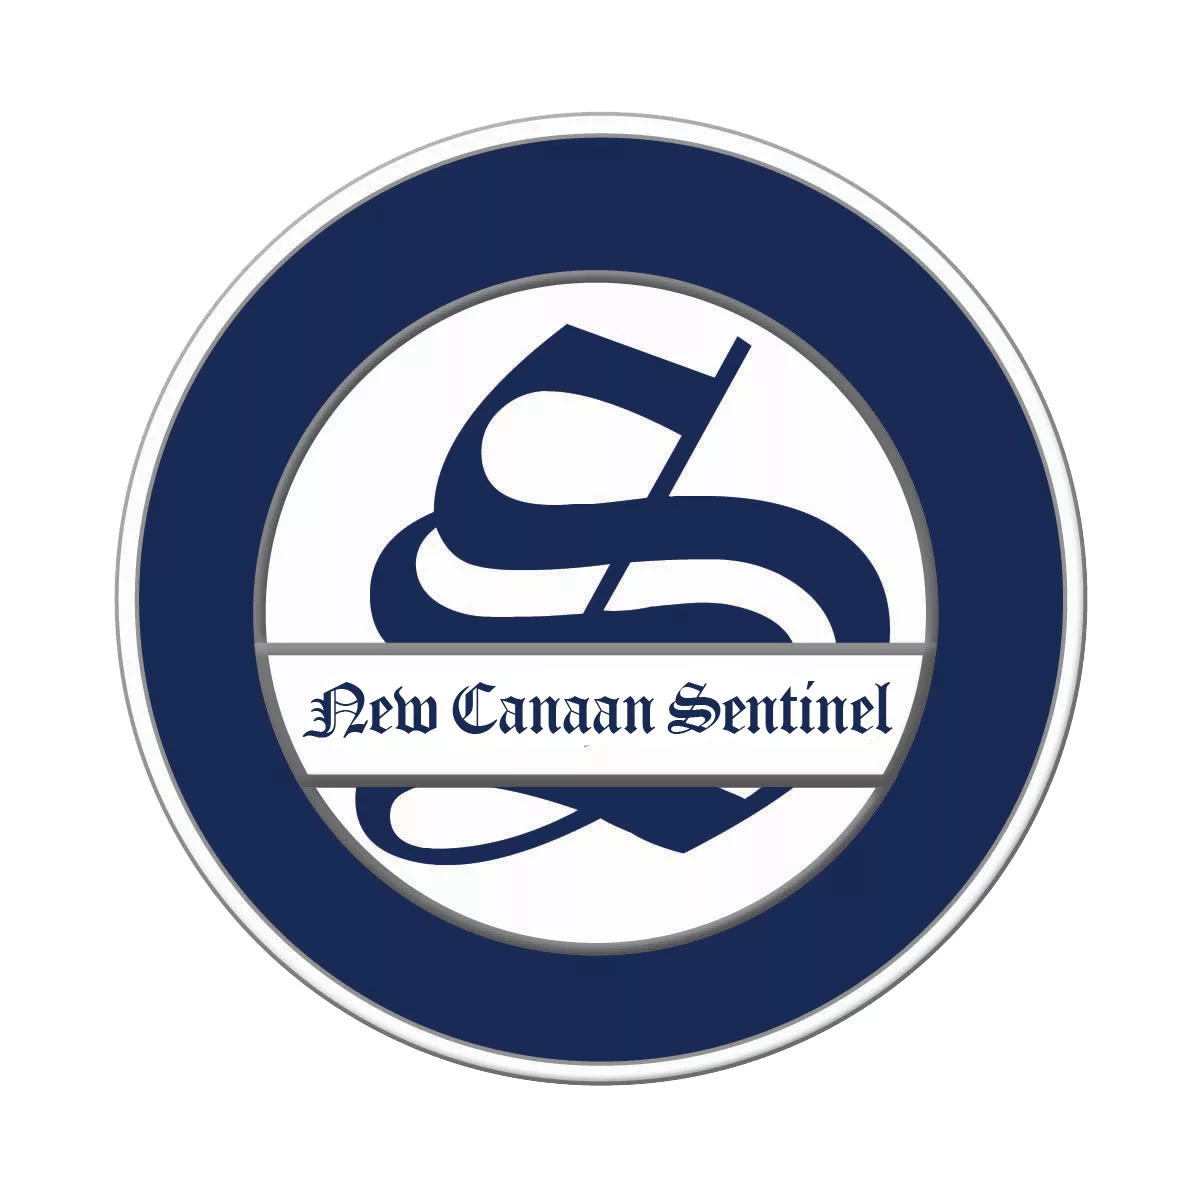 New Canaan Sentinel Circle Logo Blue